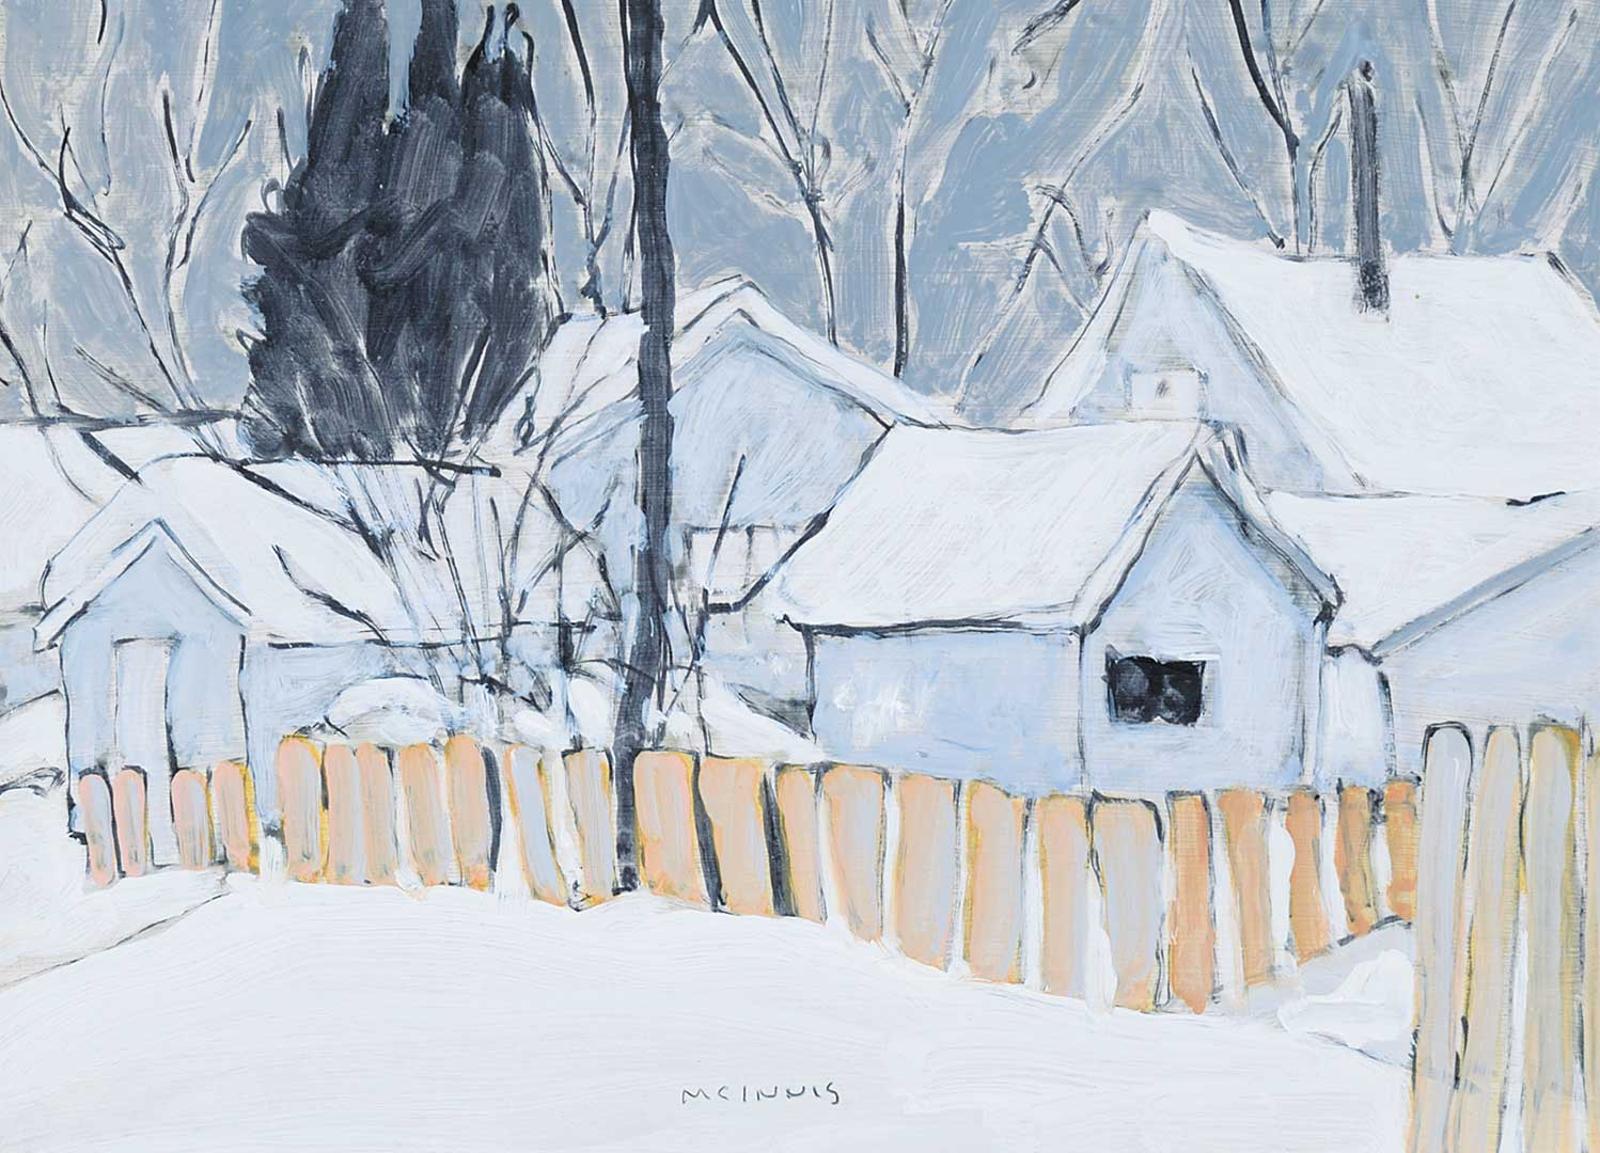 Robert F.M. McInnis (1942) - Untitled - My Backyard in Winter